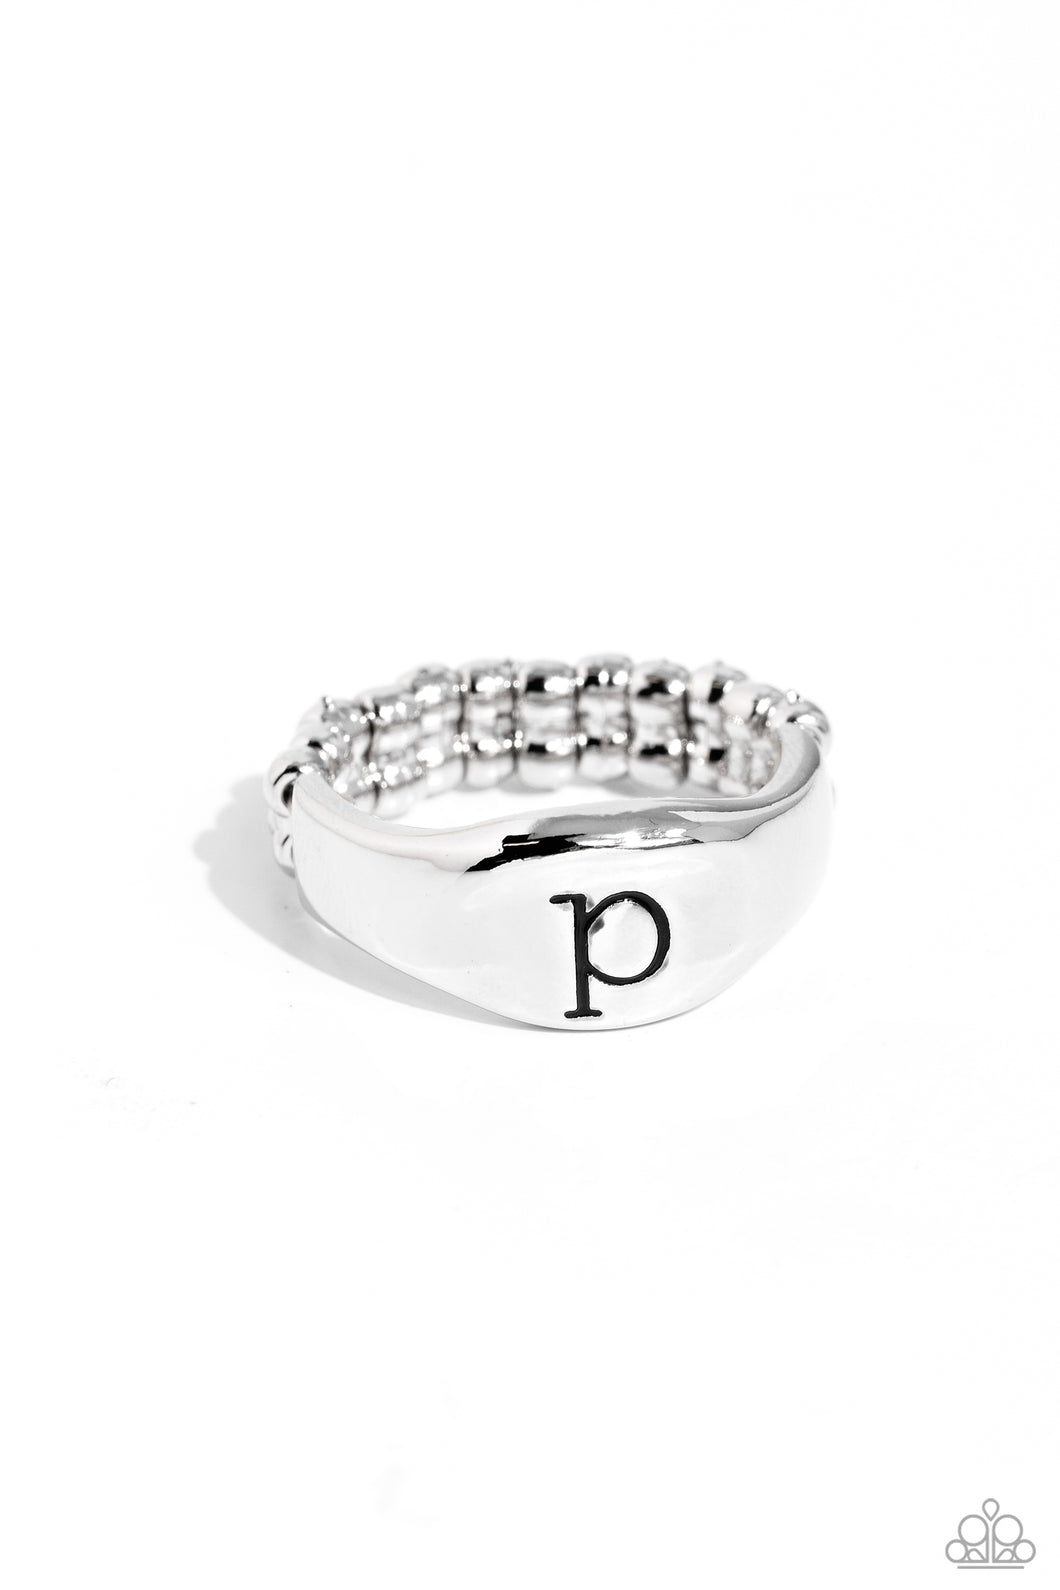 Monogram Memento - Silver - P Initial Ring